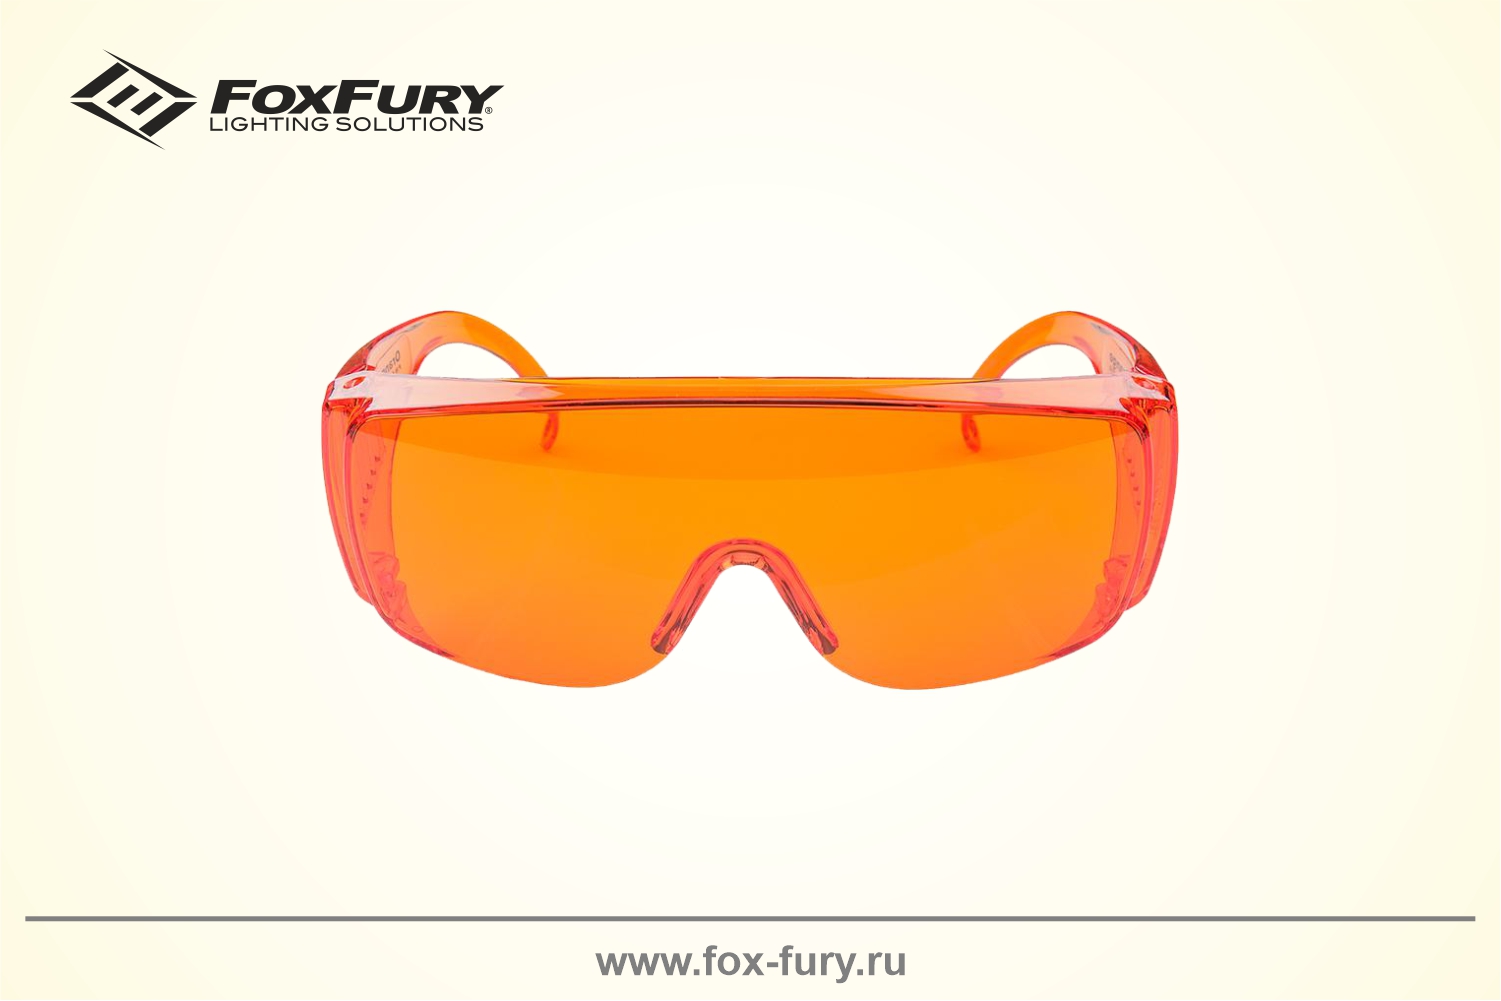 Очки для криминалистики FoxFury оранжевые 600-1010